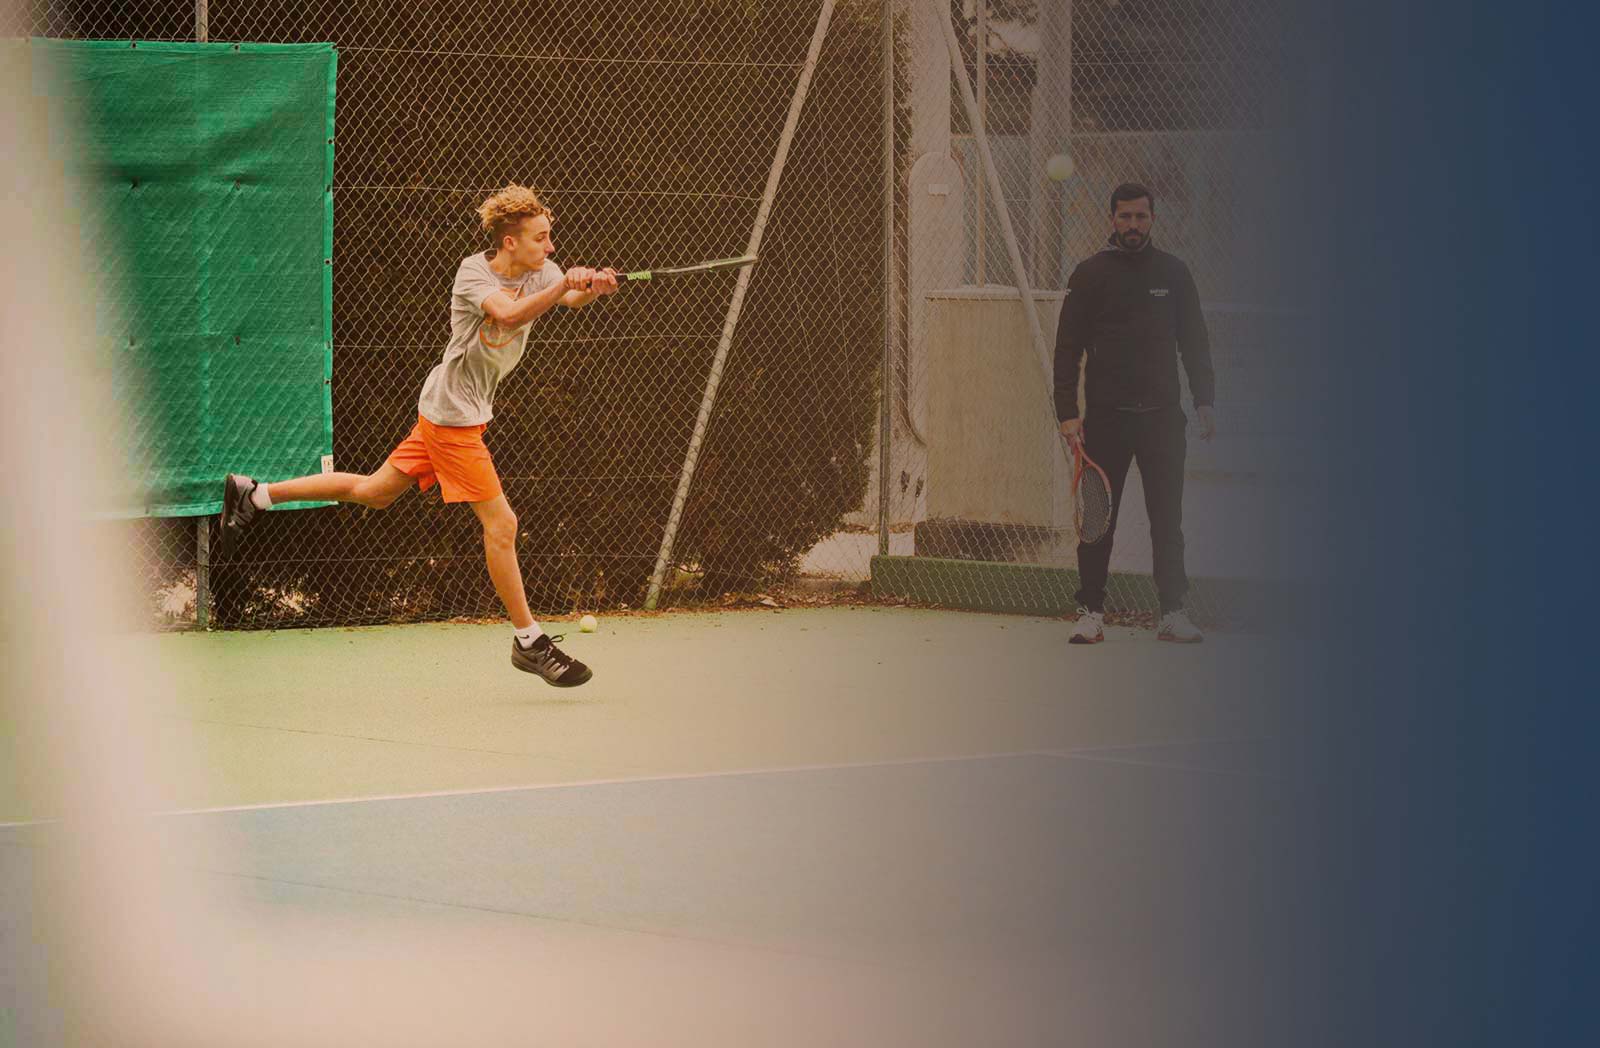 Competition tennis et coaching tournoi - Academie tennis alain barrere